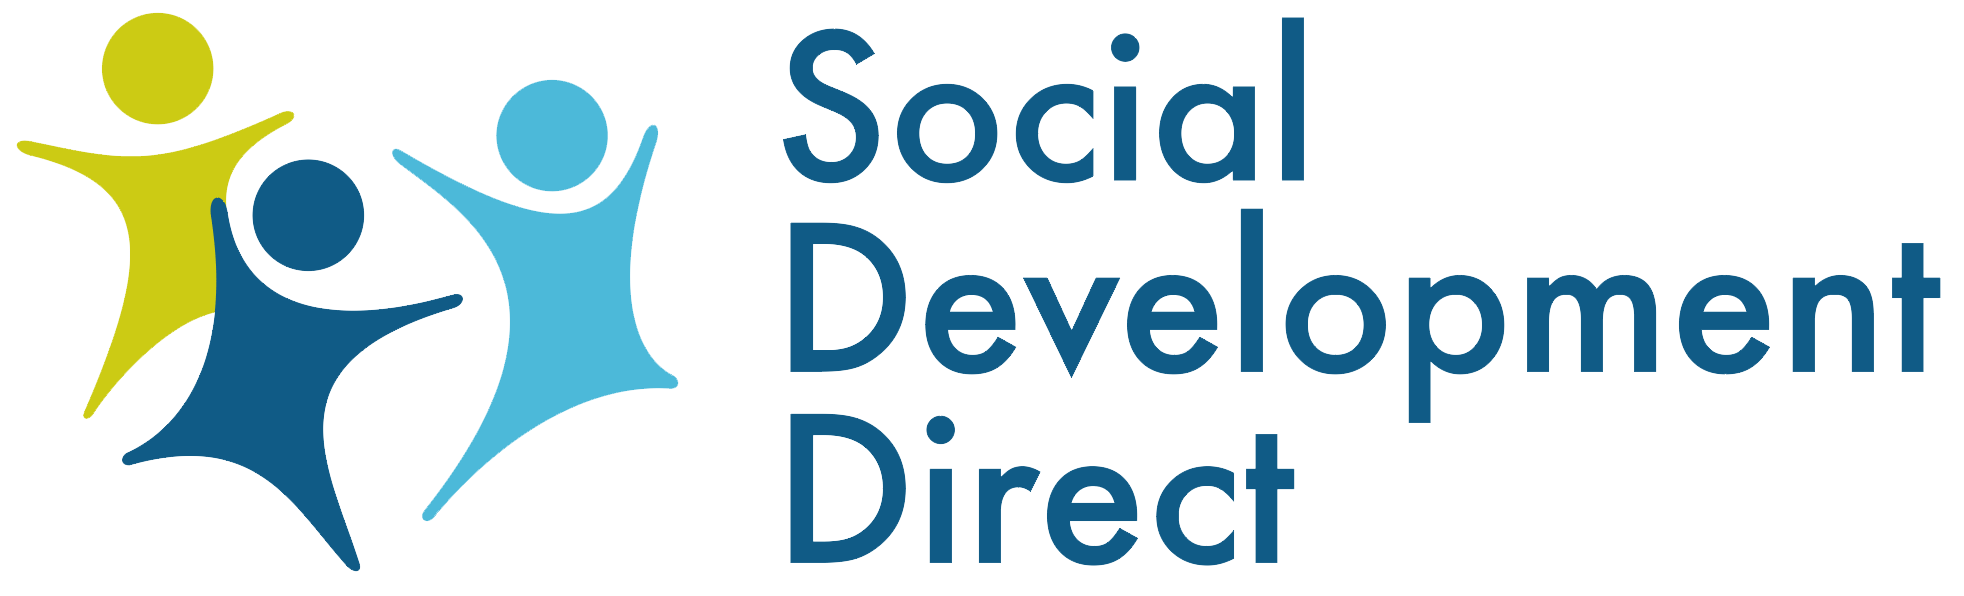 SDDirect  - Social Development Direct